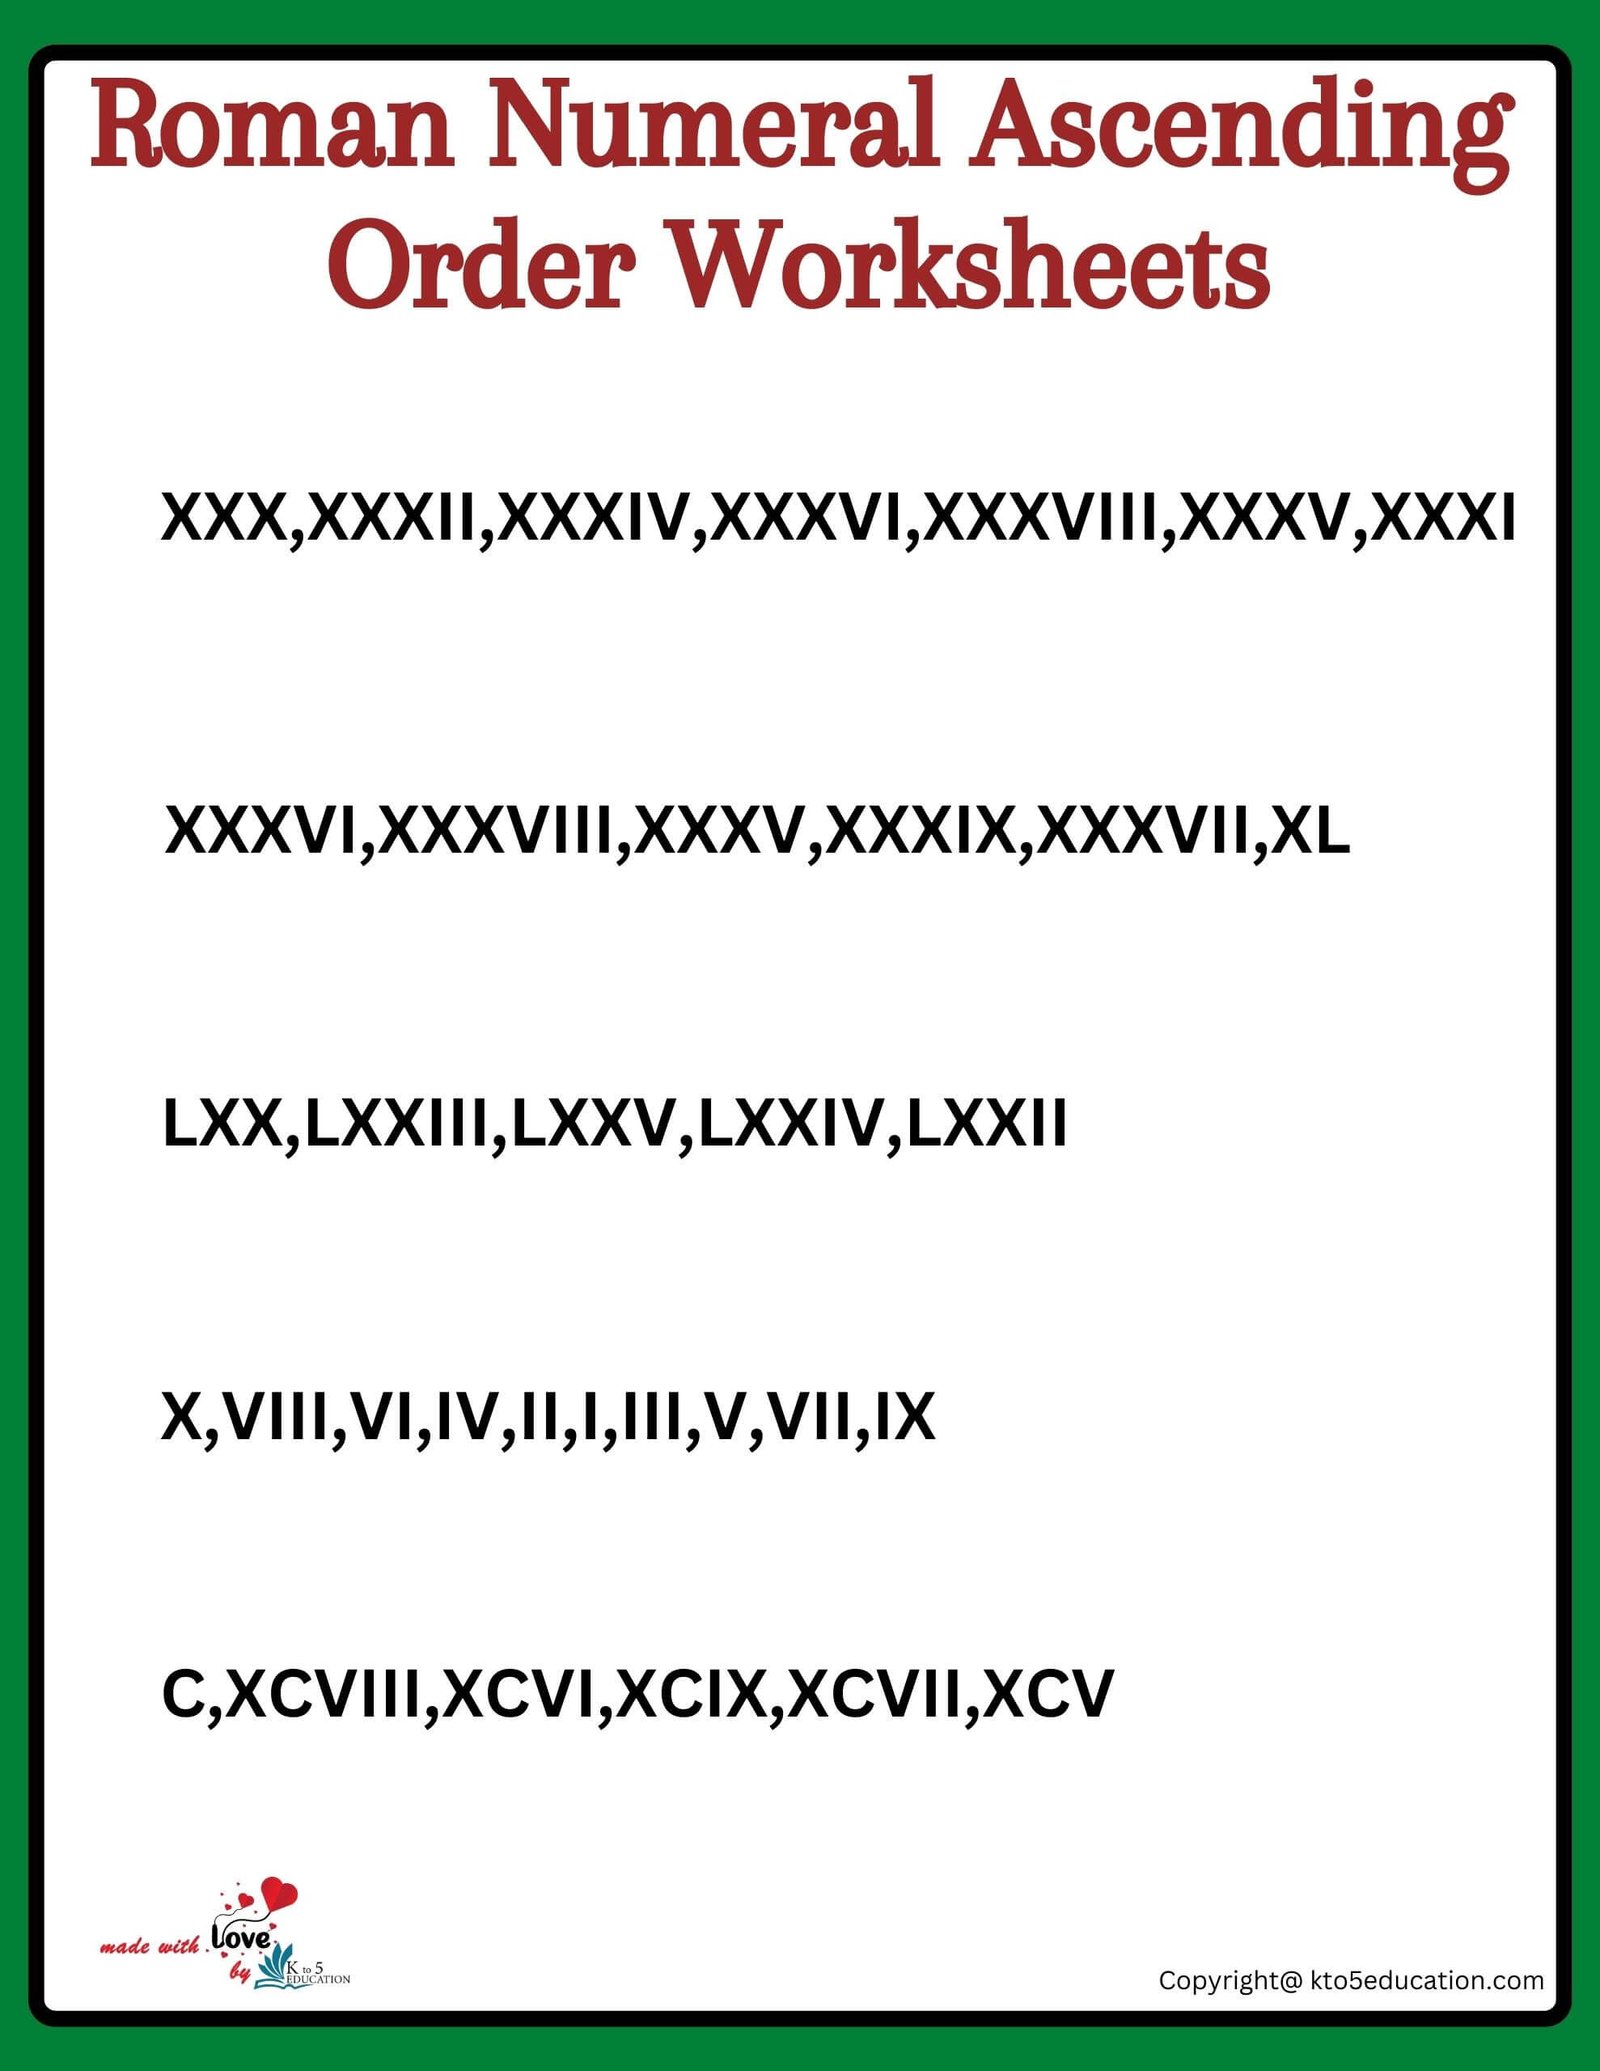 Roman Numeral Number Descending Ordering Worksheets For Grade 3 1 to 100